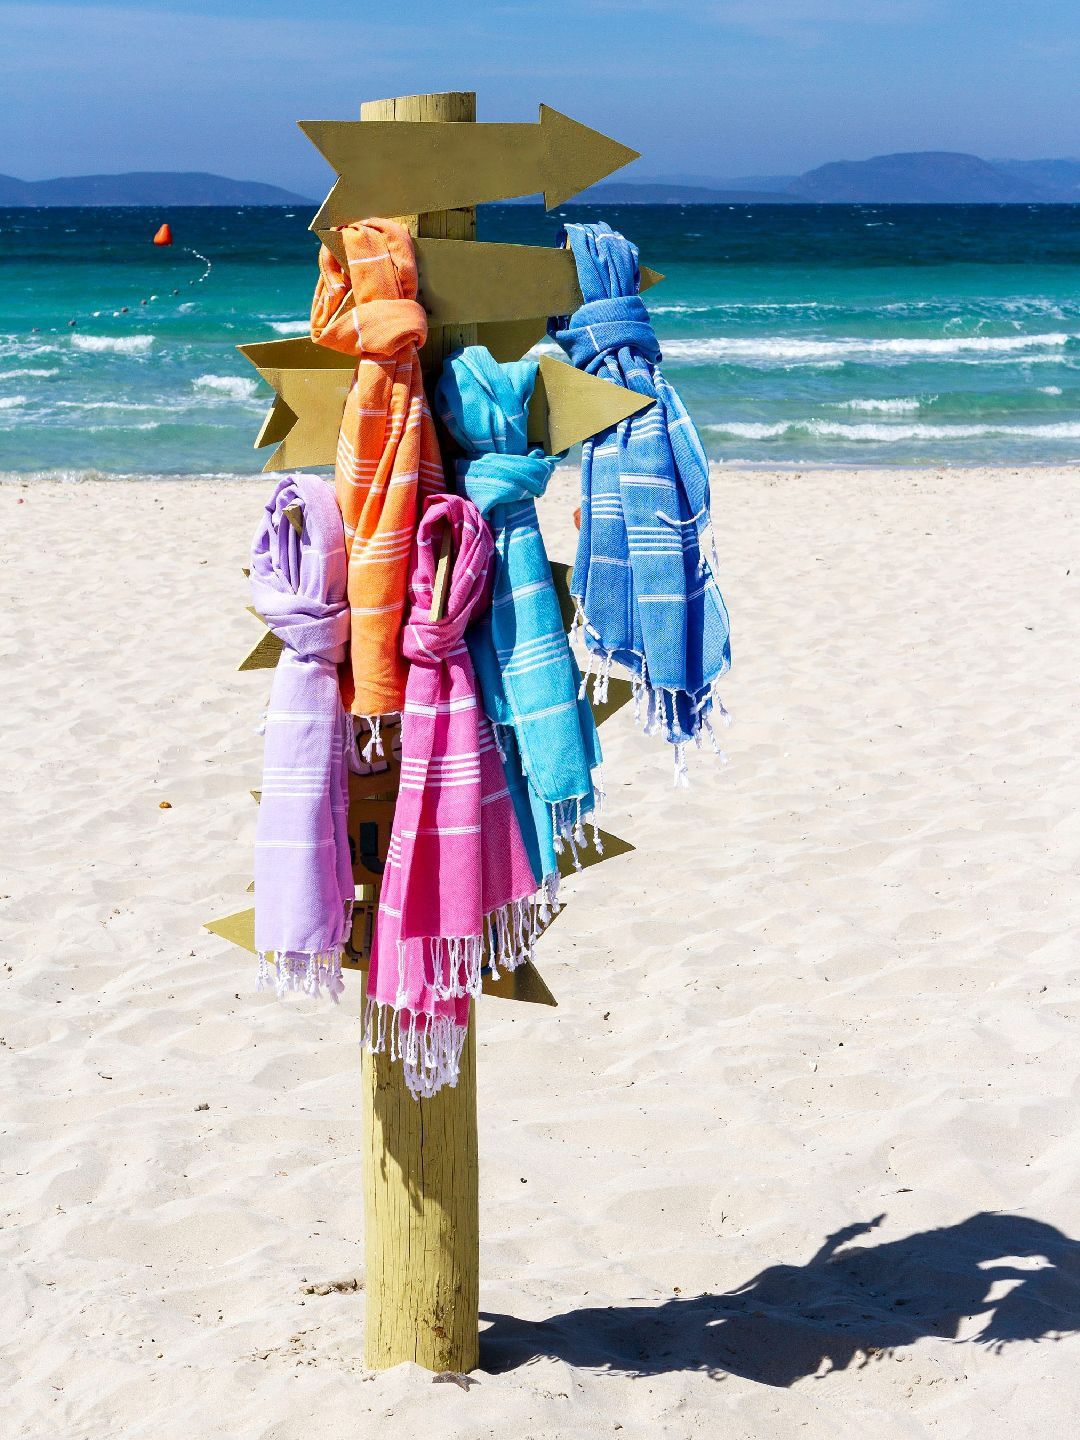  "Luxurious Turkish Cotton Beach Towel - Perfect for Summer Fun!"